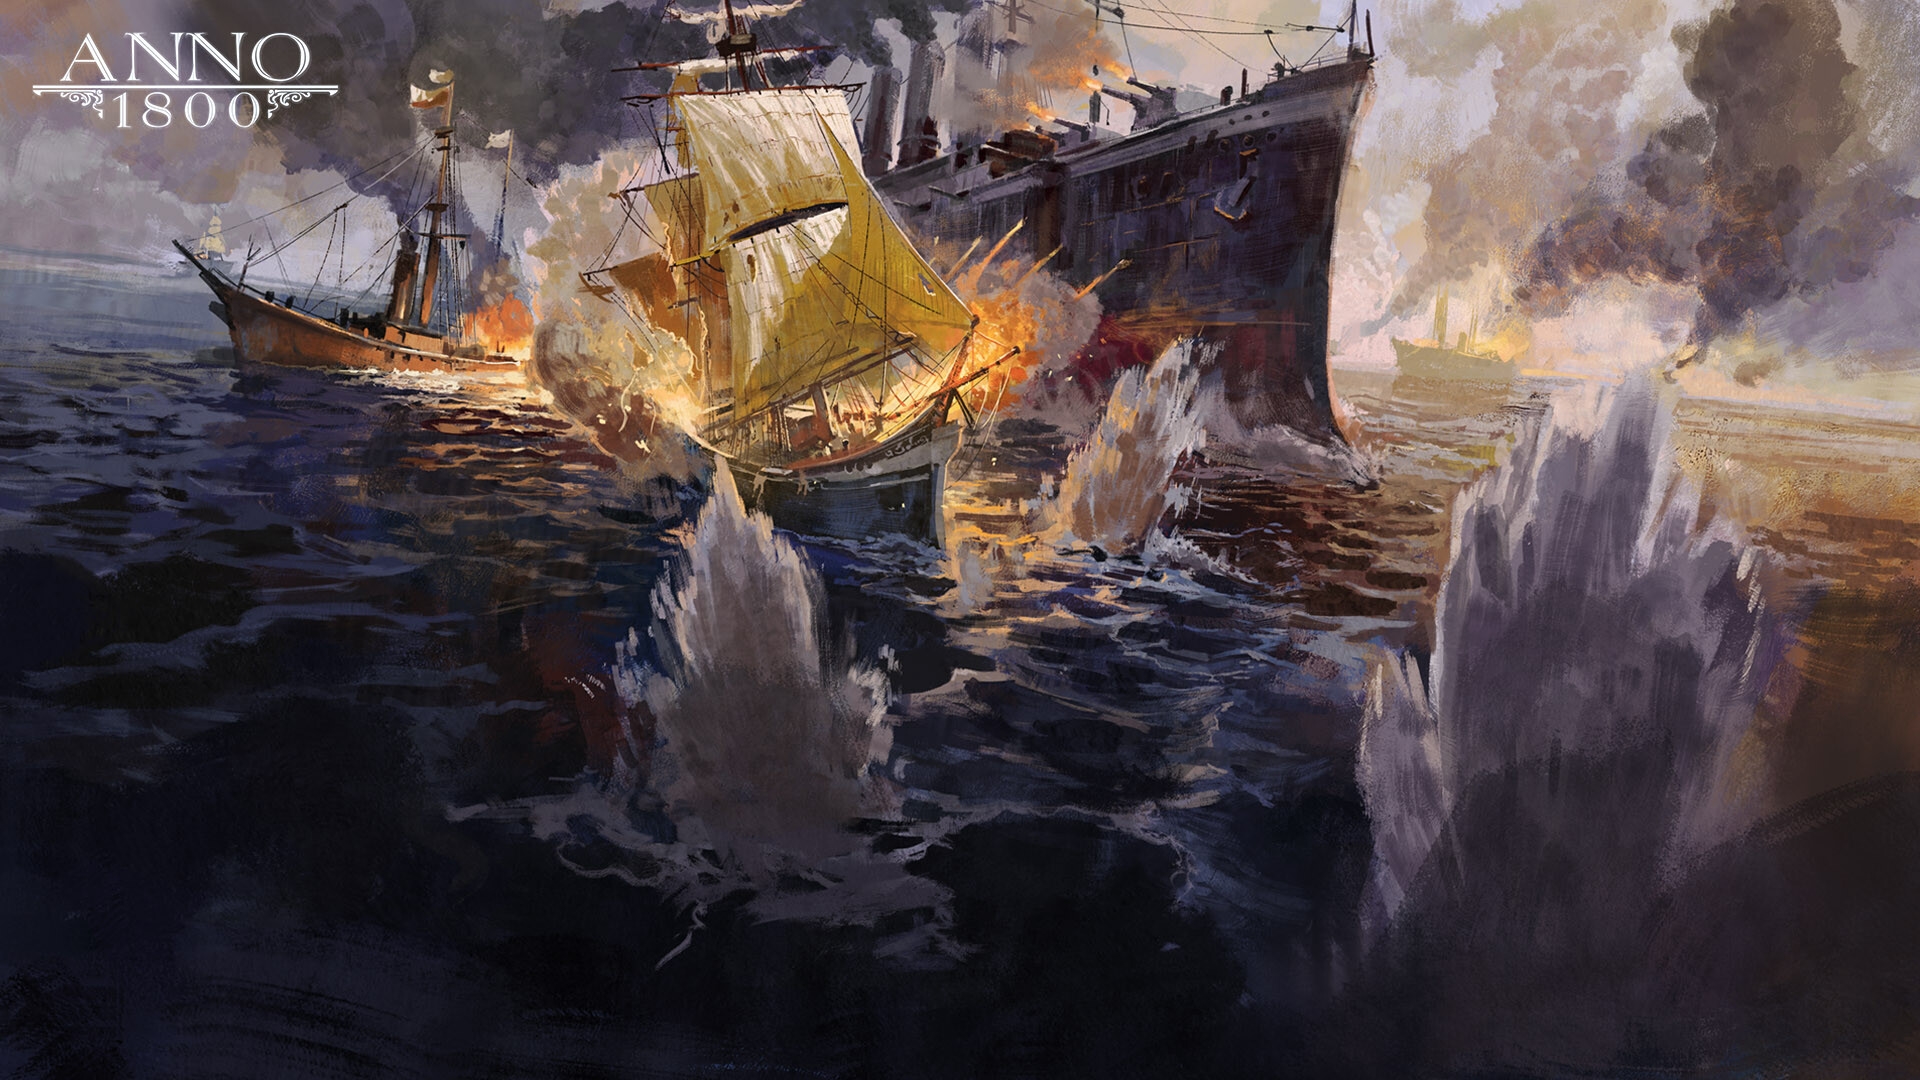 Anno 1800 1800s Digital Art Concept Art Artwork Ubisoft Sailing Ship Battleships Ocean Battle Explos 1920x1080